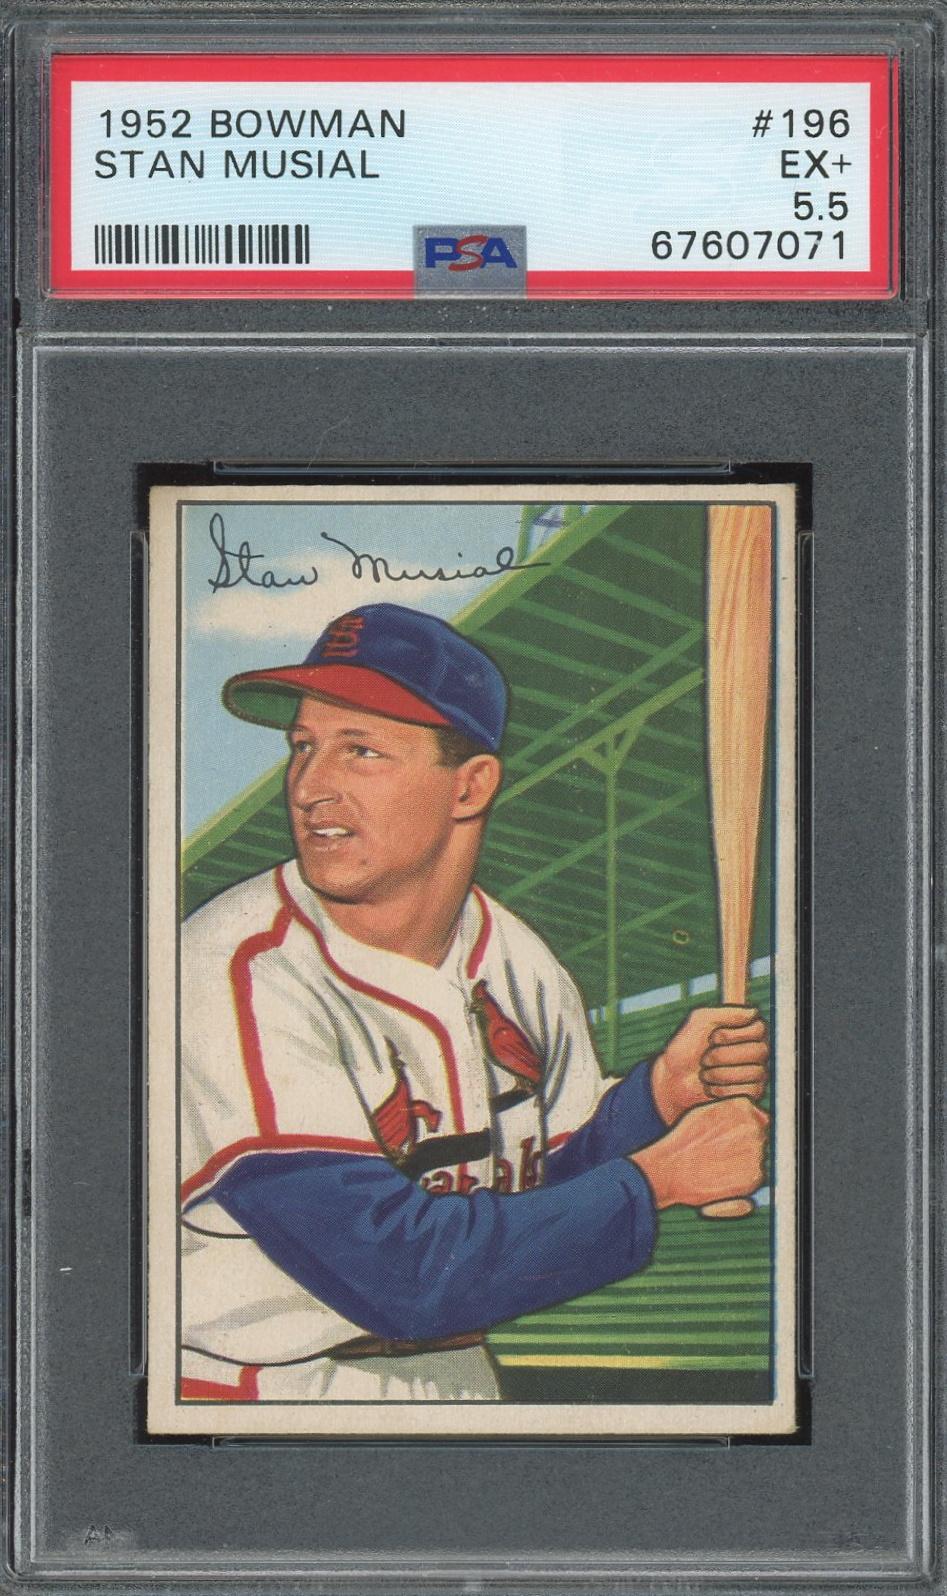 A 1952 Bowman Stan Musial Baseball Card No. 196 (PSA 5 EX)